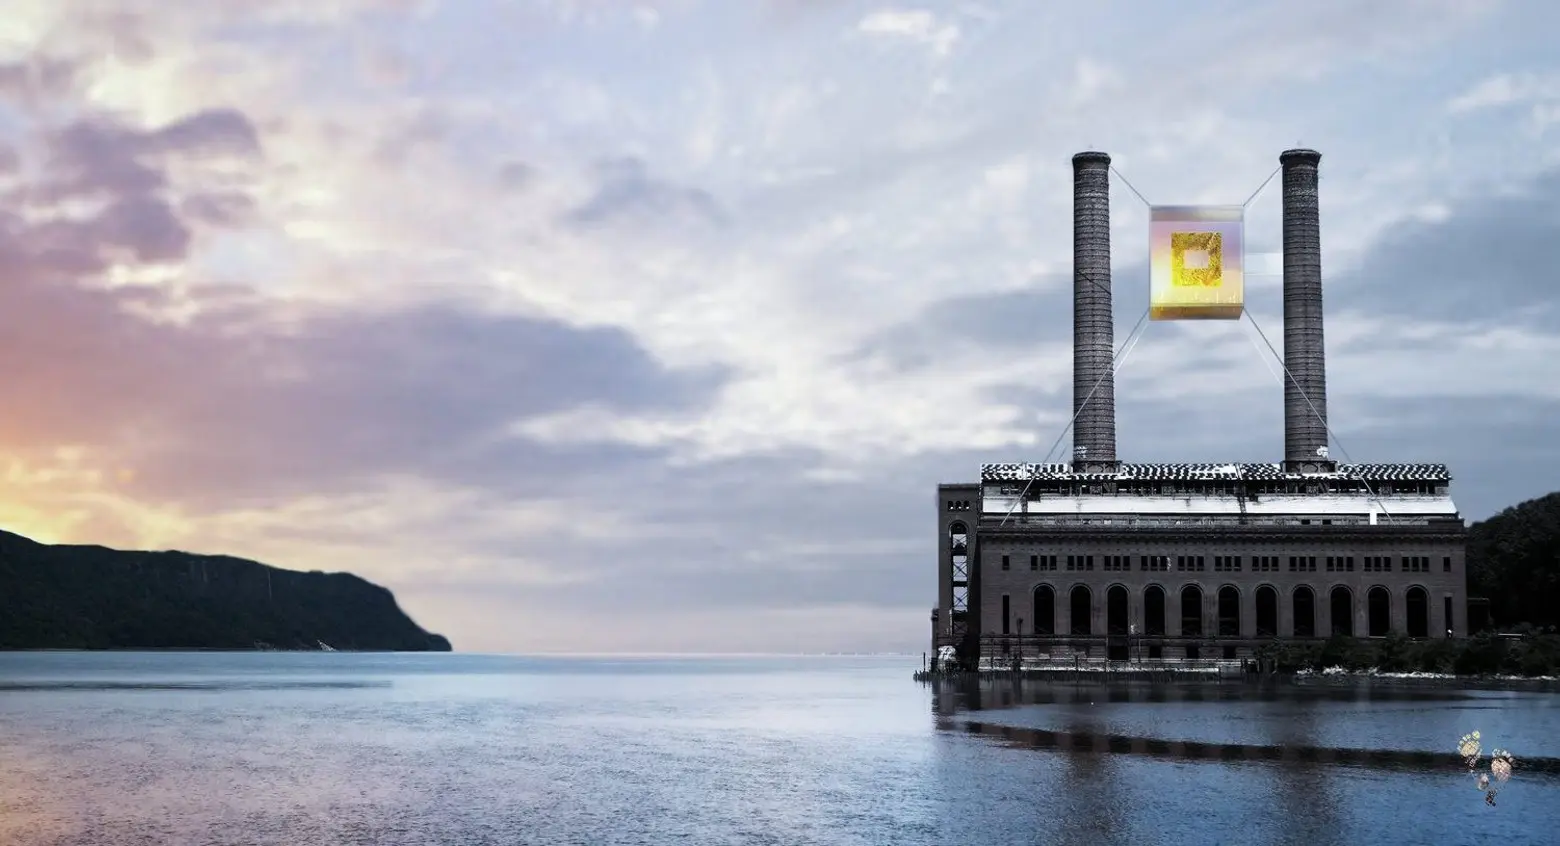 Developer proposes floating glass restaurant for Hudson River’s Glenwood Power Plant